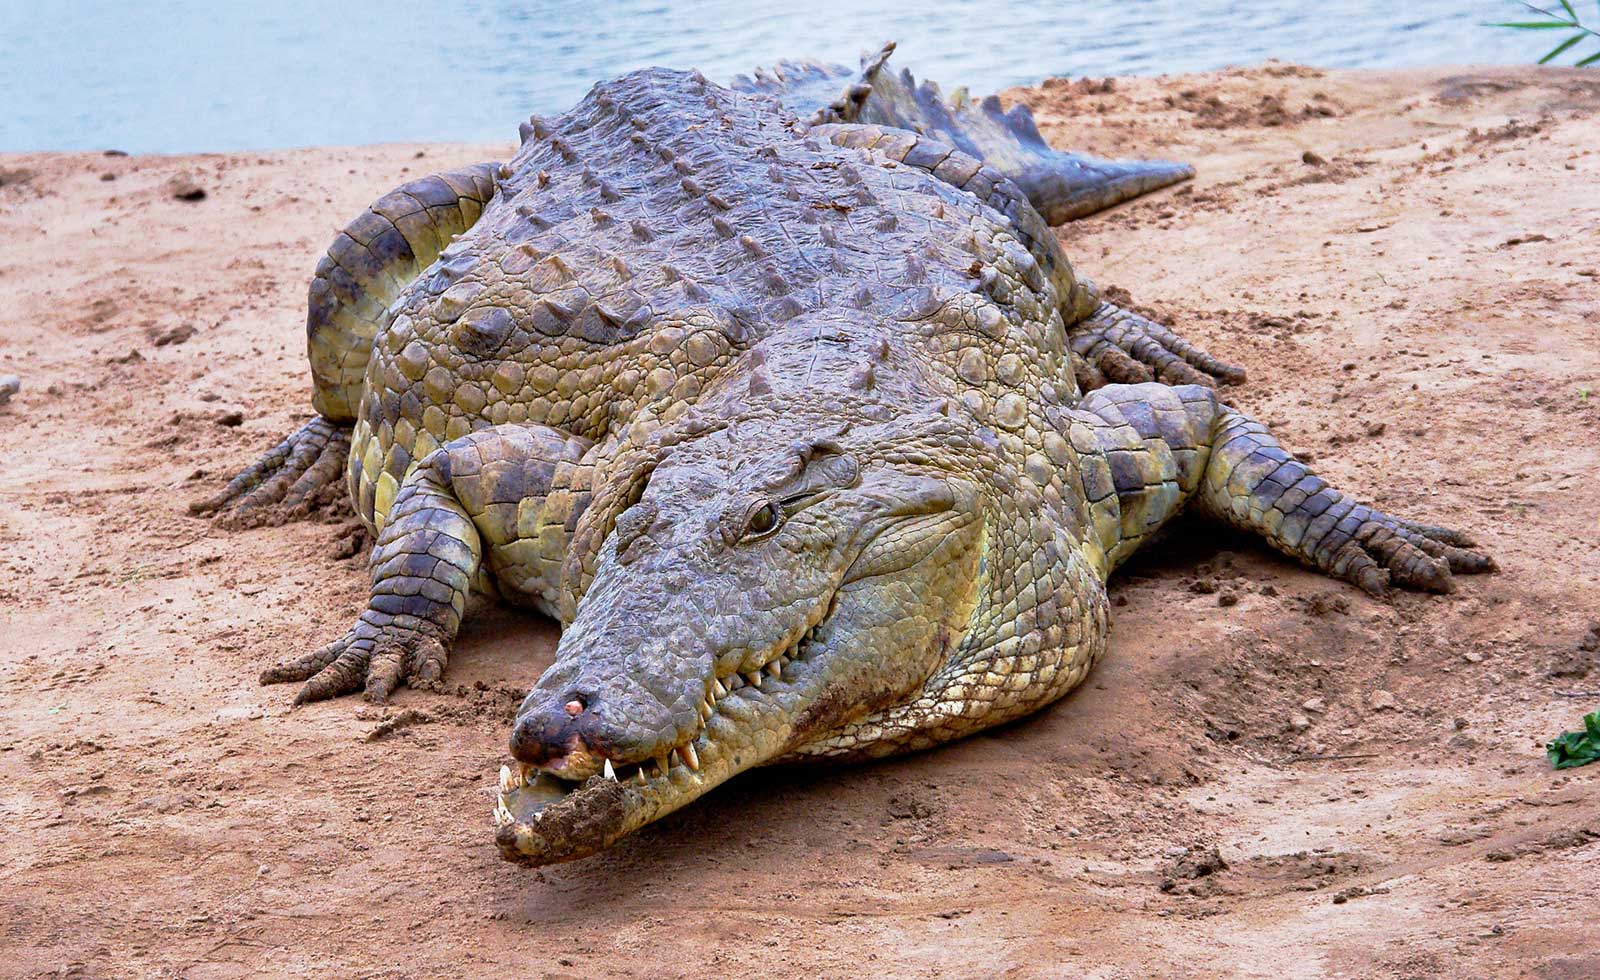 Crocodile at Waterhole